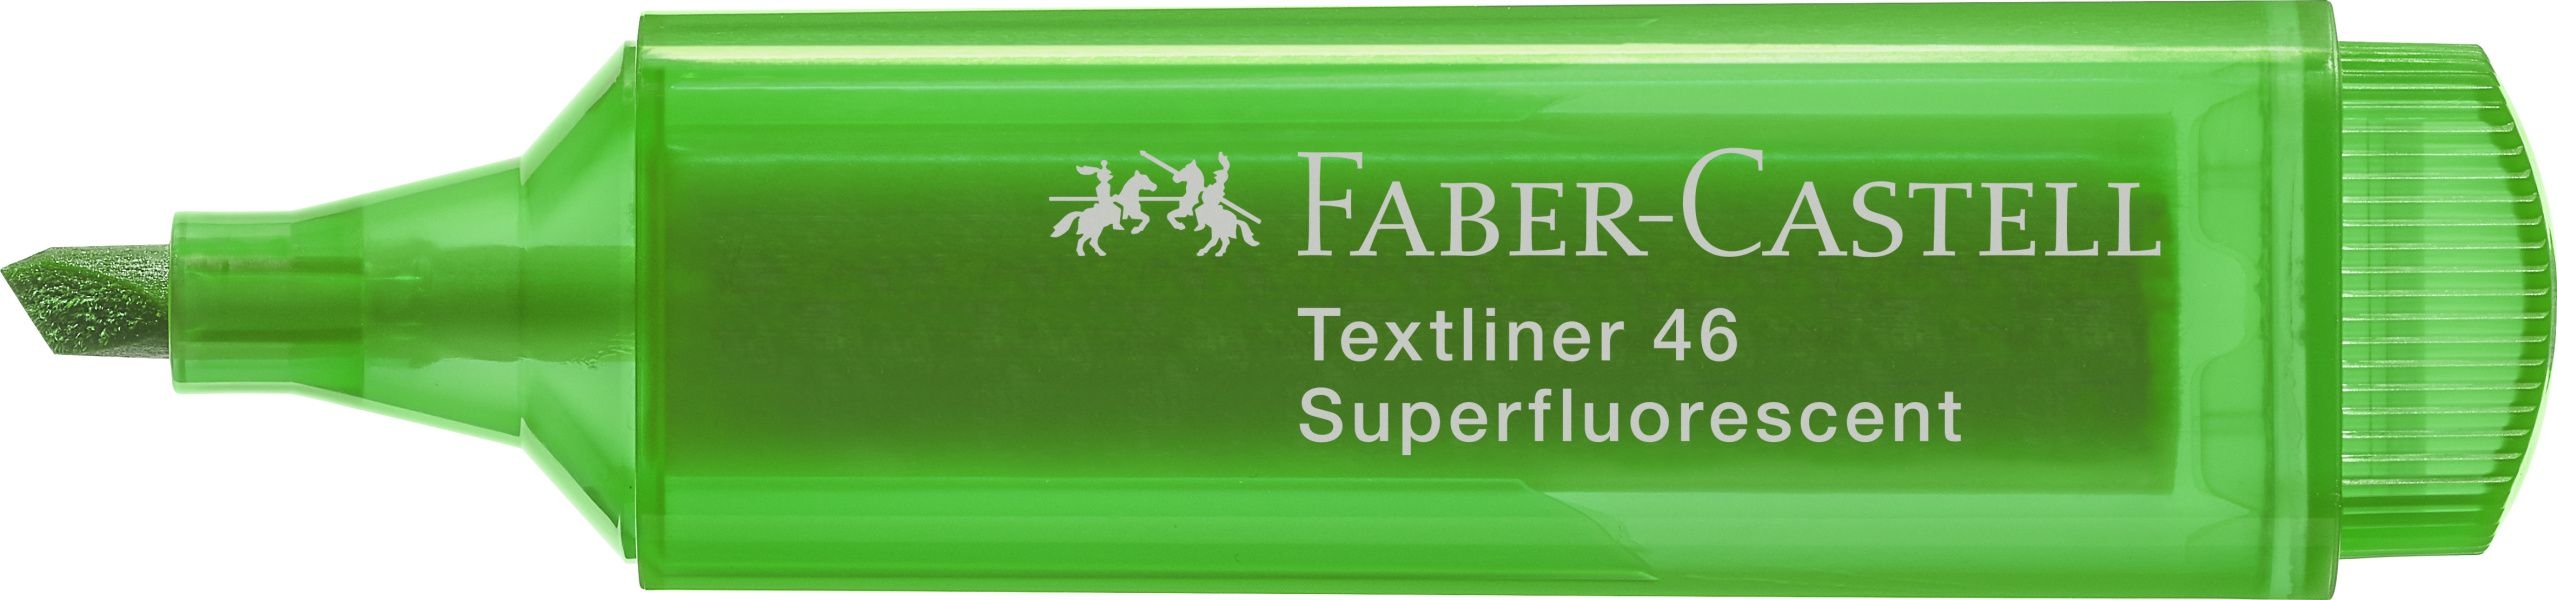 FABER-CASTELL Textmarker TL 46 Superfluor 154663 grün grün